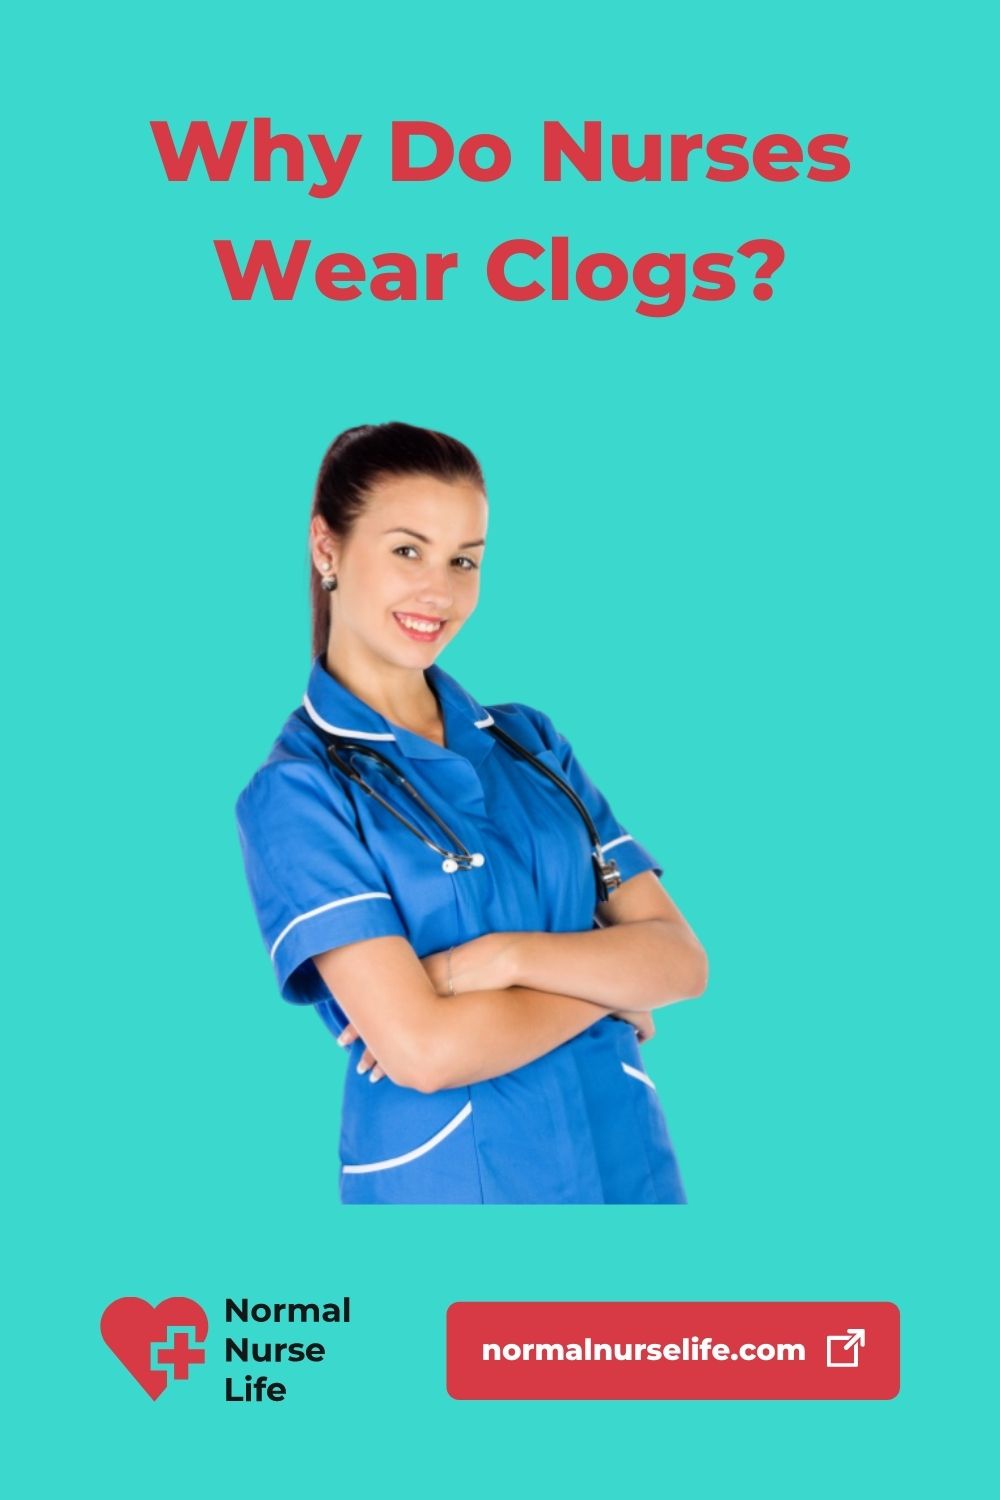 Why do nurses wear clogs